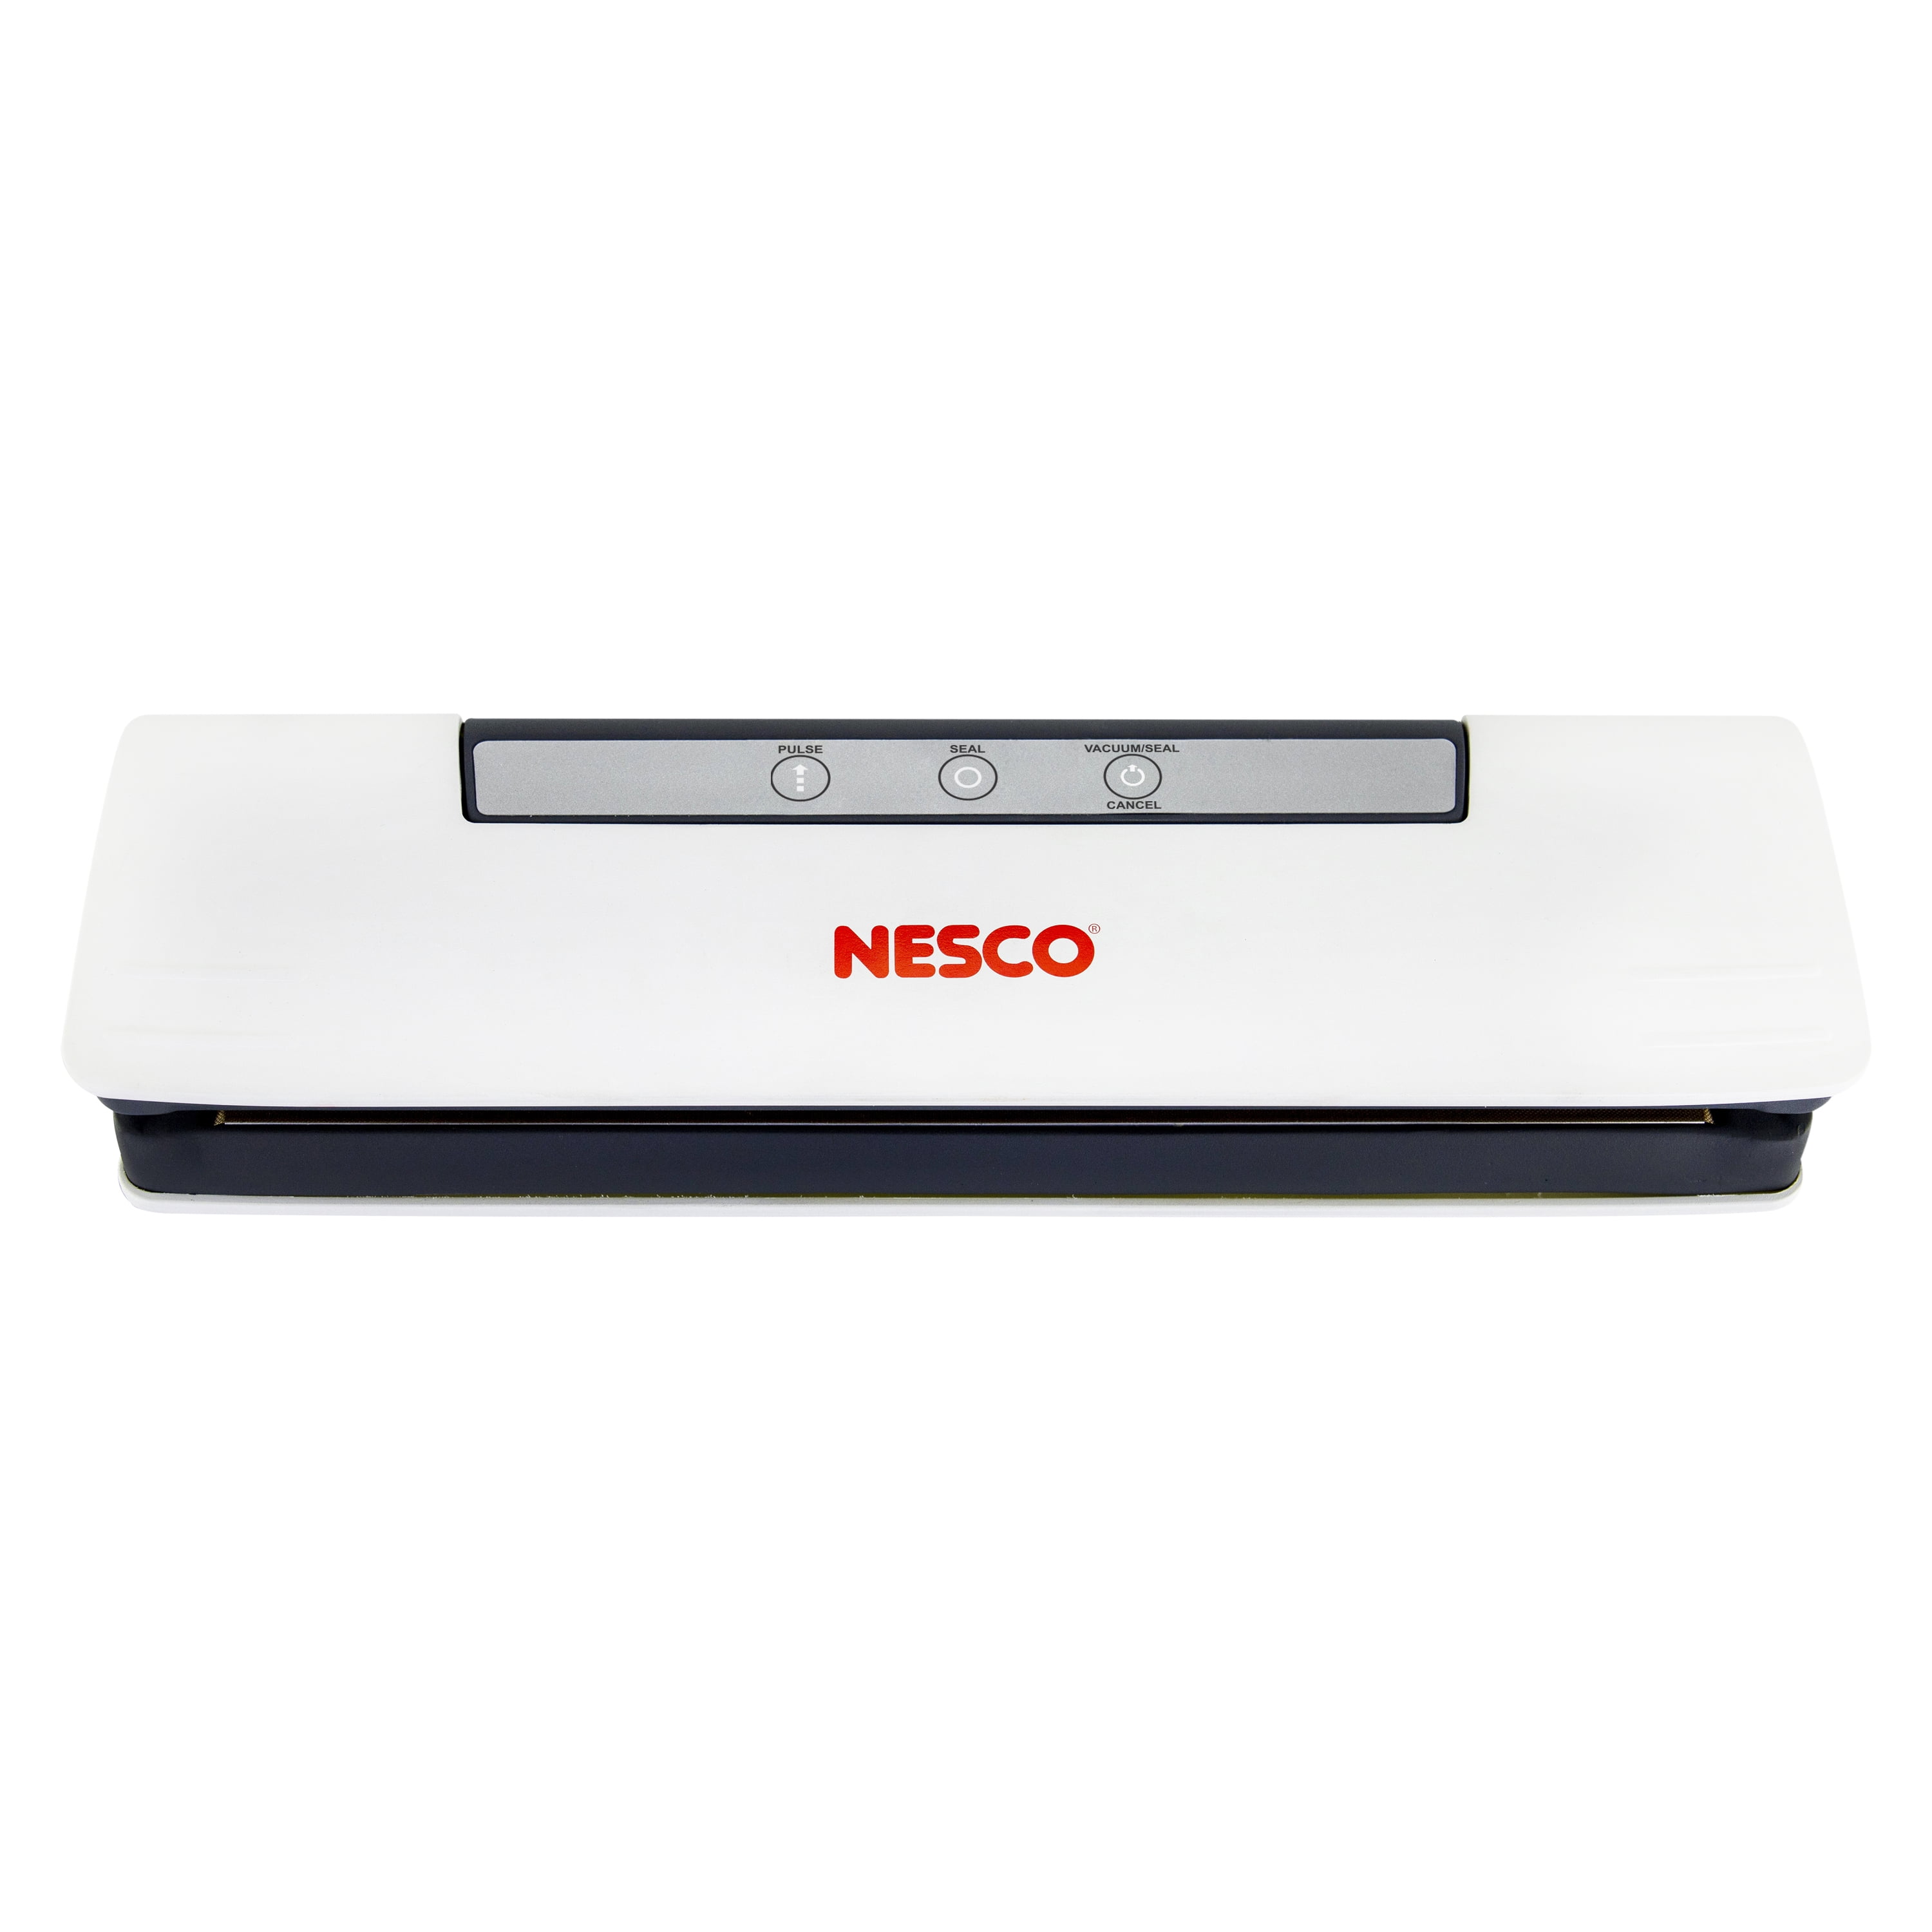 Commercial-Grade Vacuum Sealer by Nesco